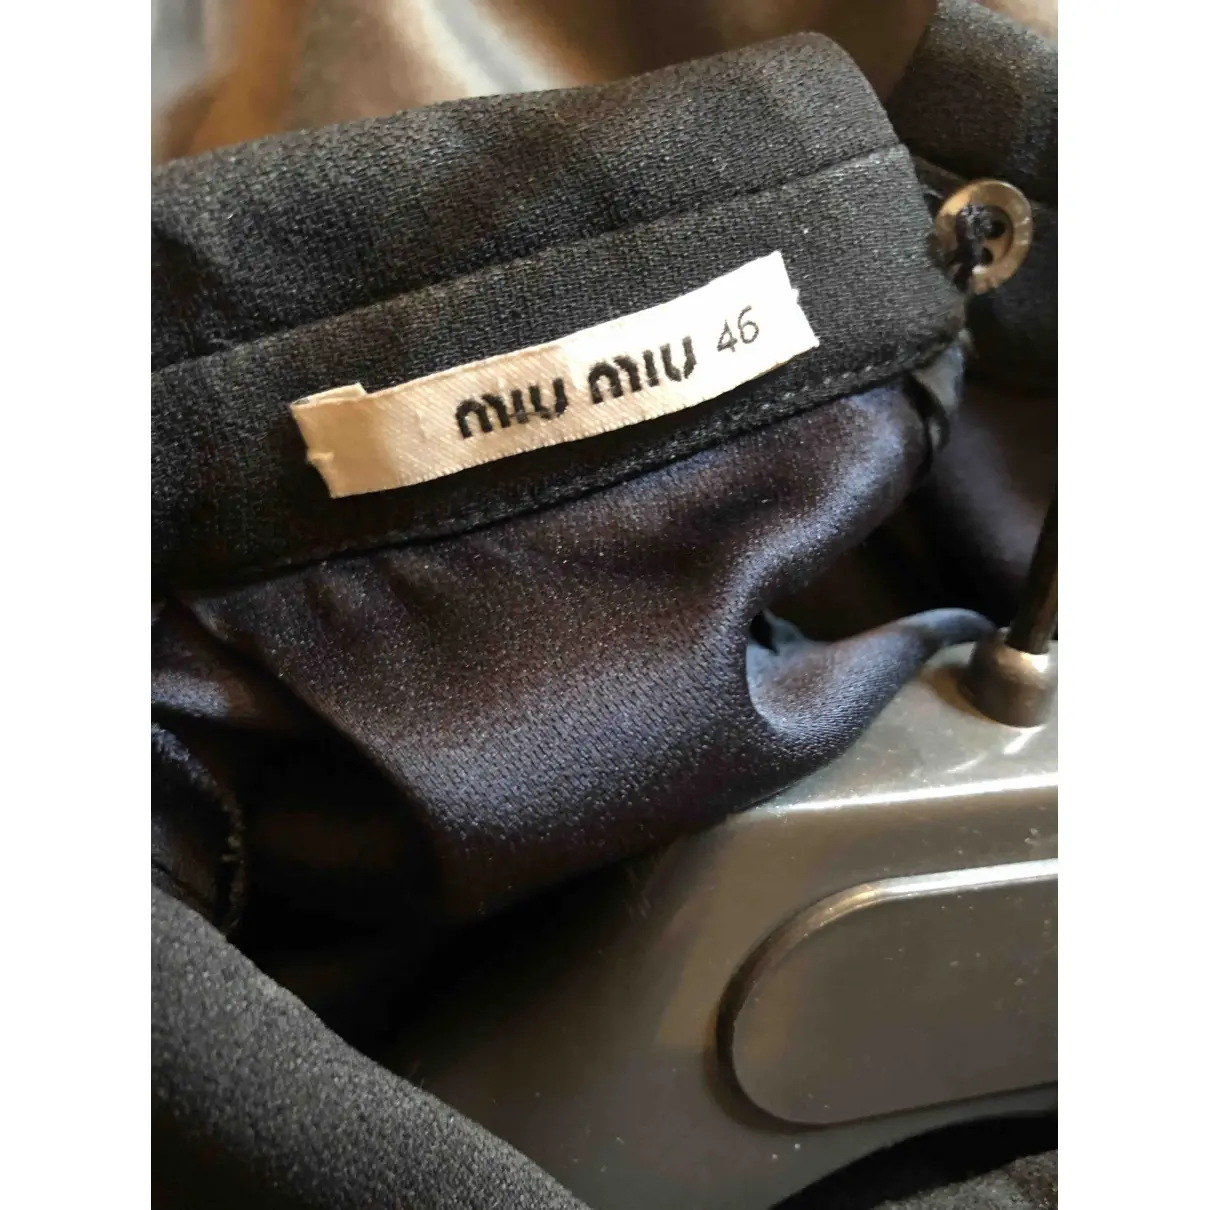 Buy Miu Miu Silk mid-length dress online